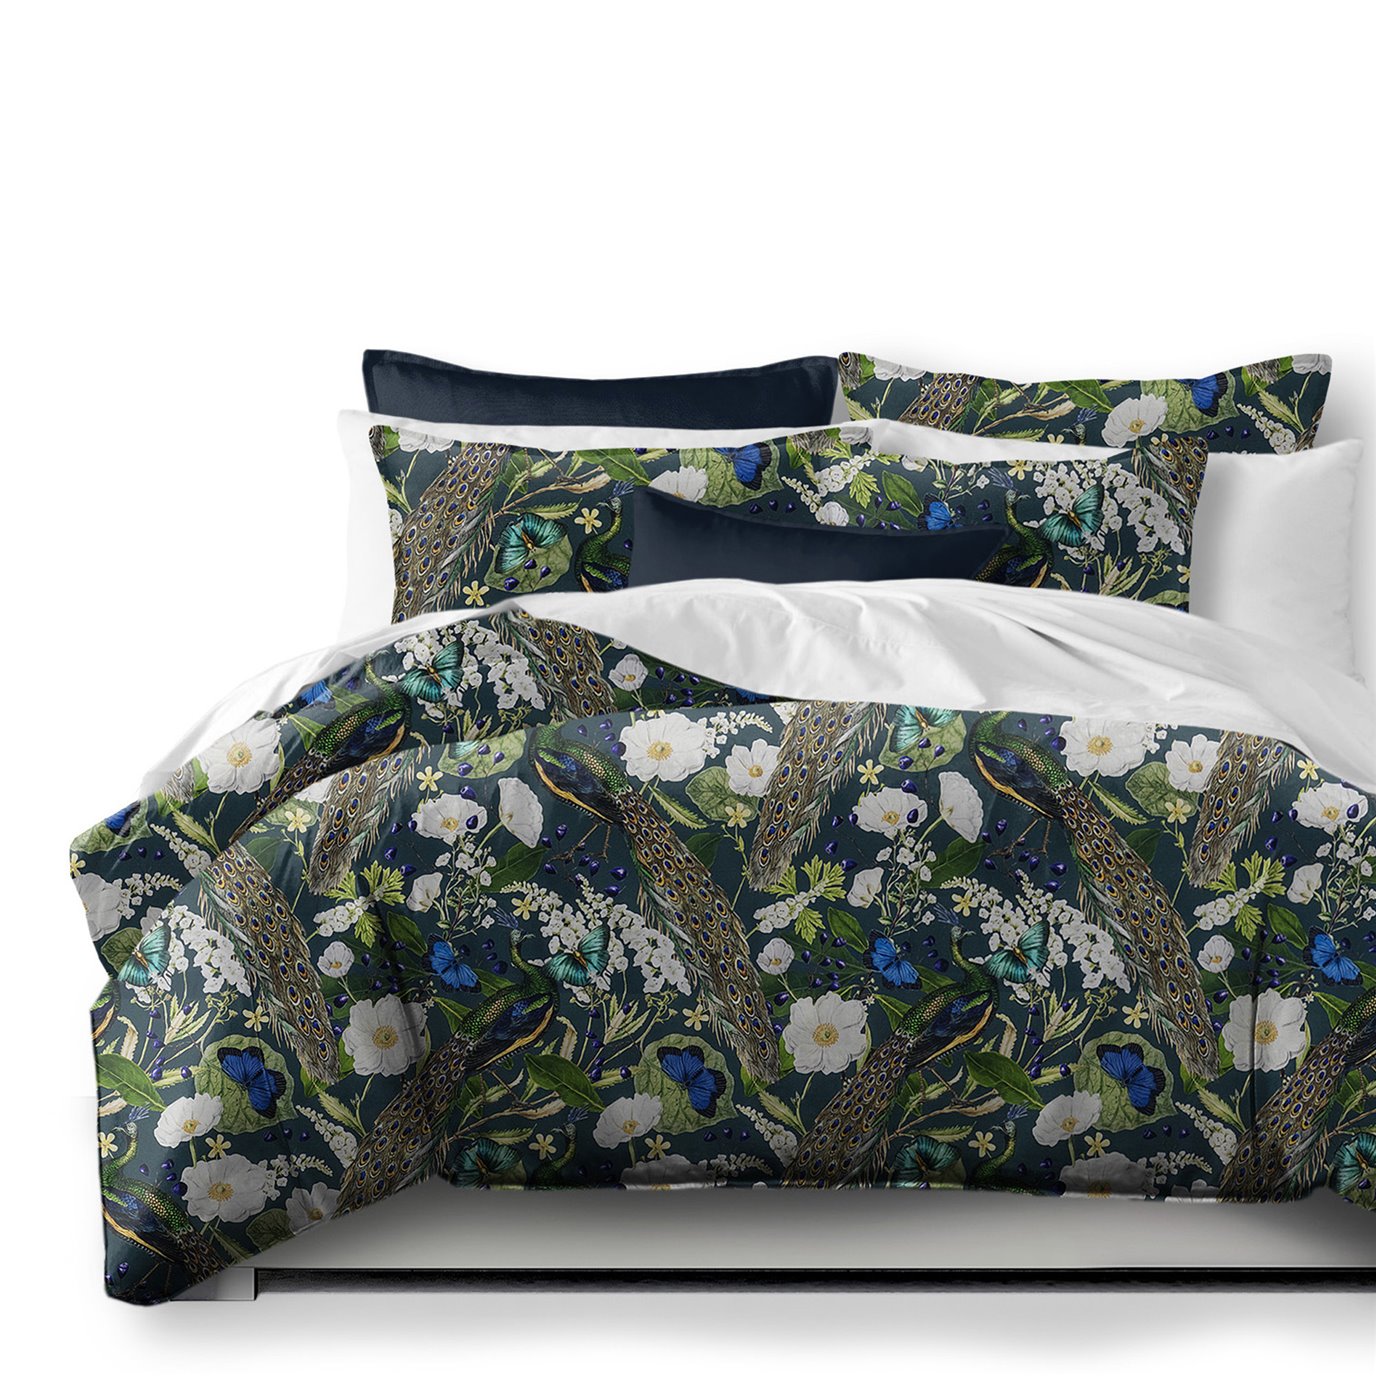 Peacock Print Teal/Navy Comforter and Pillow Sham(s) Set - Size King / California King